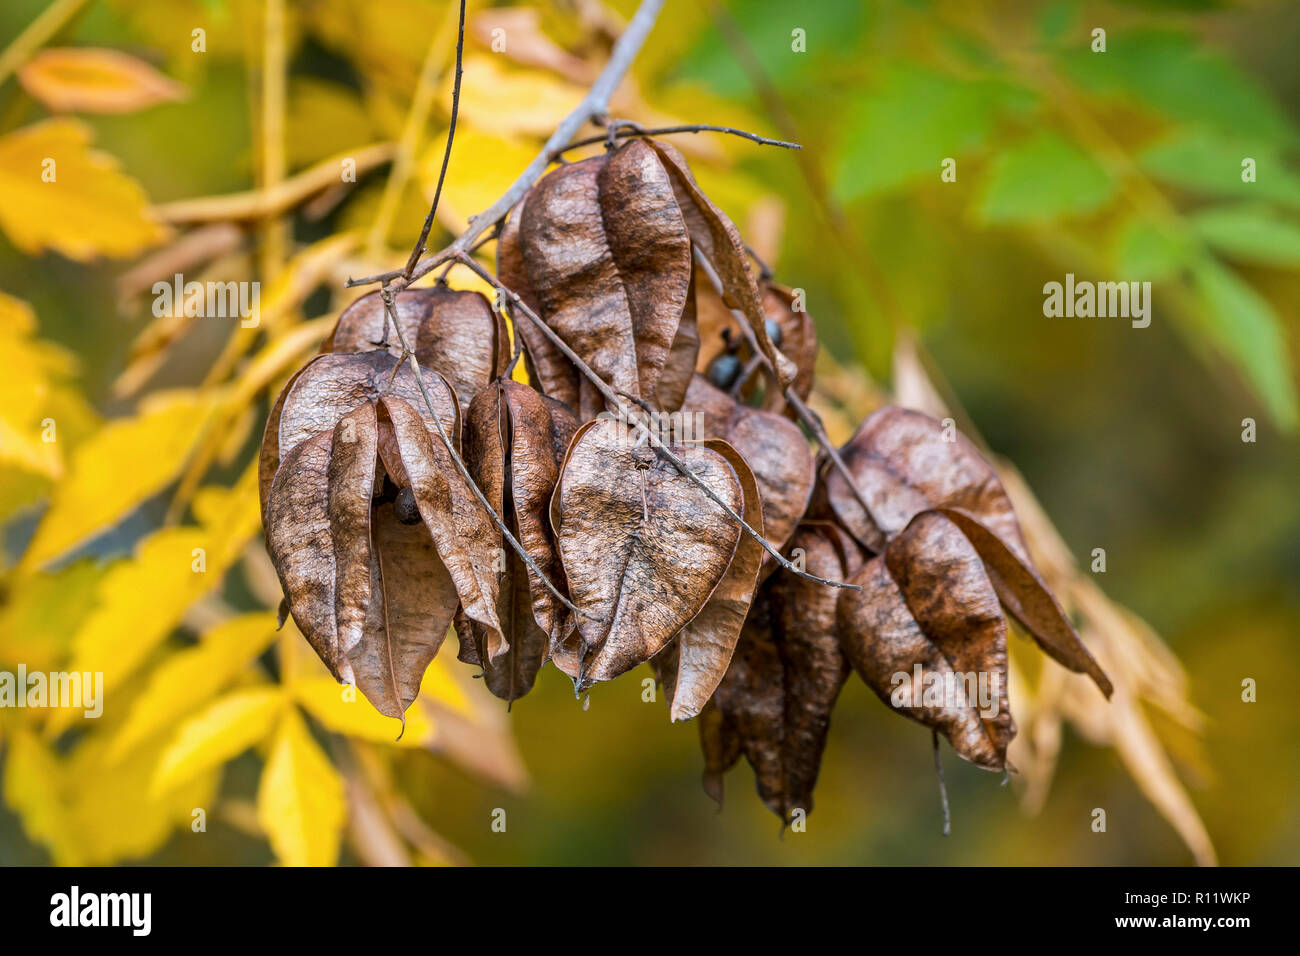 Seed pods and leaves of goldenrain tree / pride of India / China tree / varnish tree (Koelreuteria paniculata) native to eastern Asia, China and Korea Stock Photo